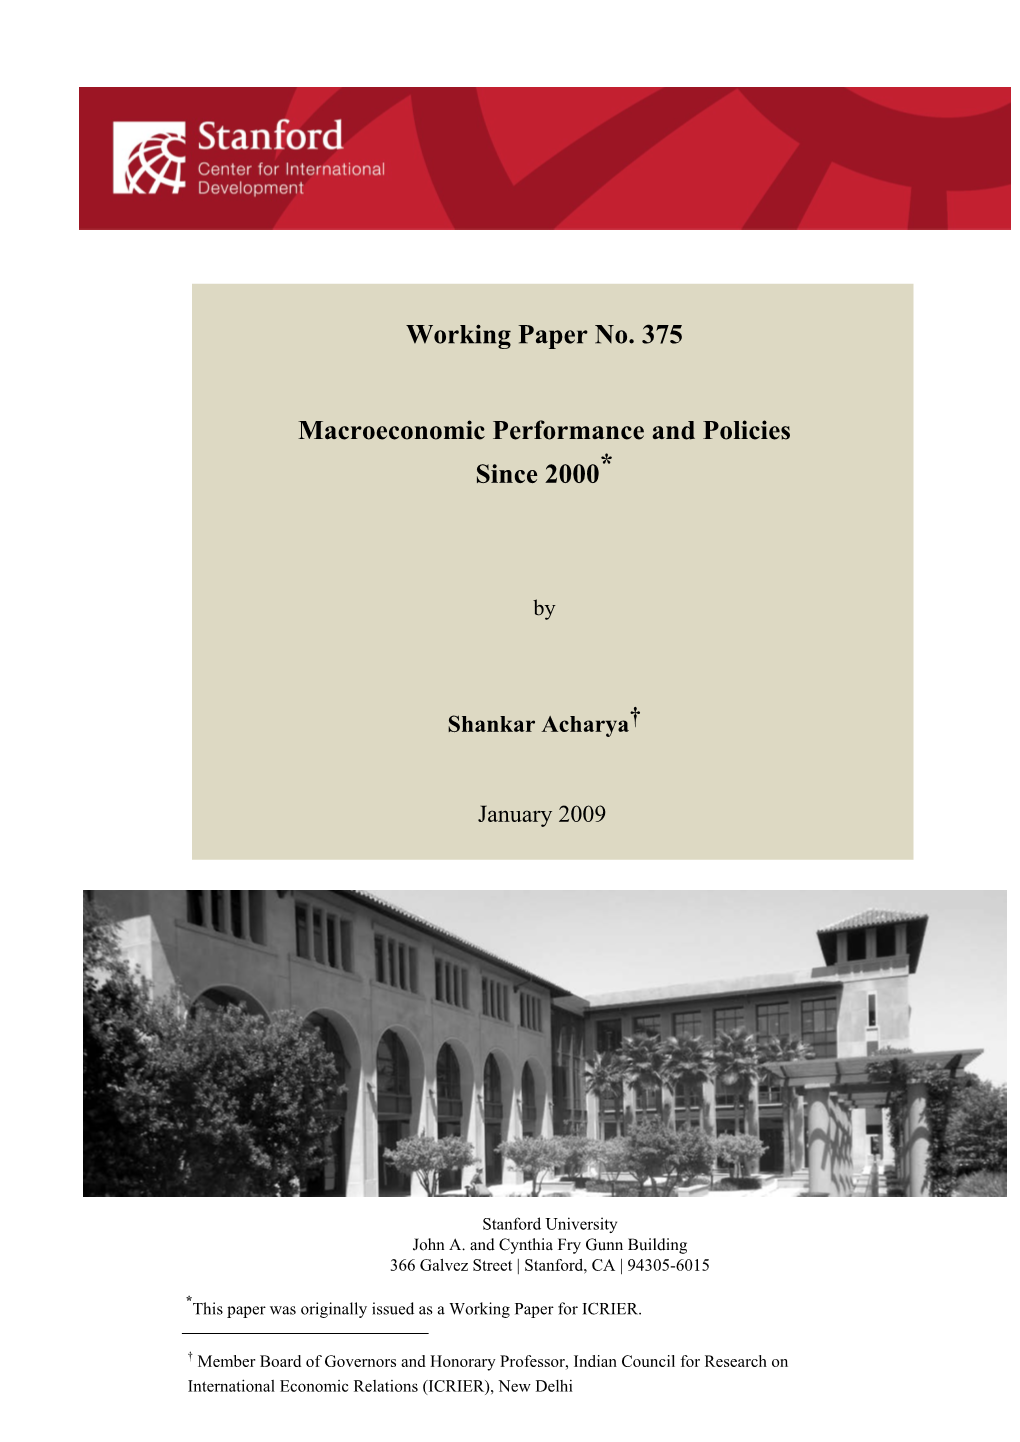 Macroeconomic Policies and Performance, 2001-2008